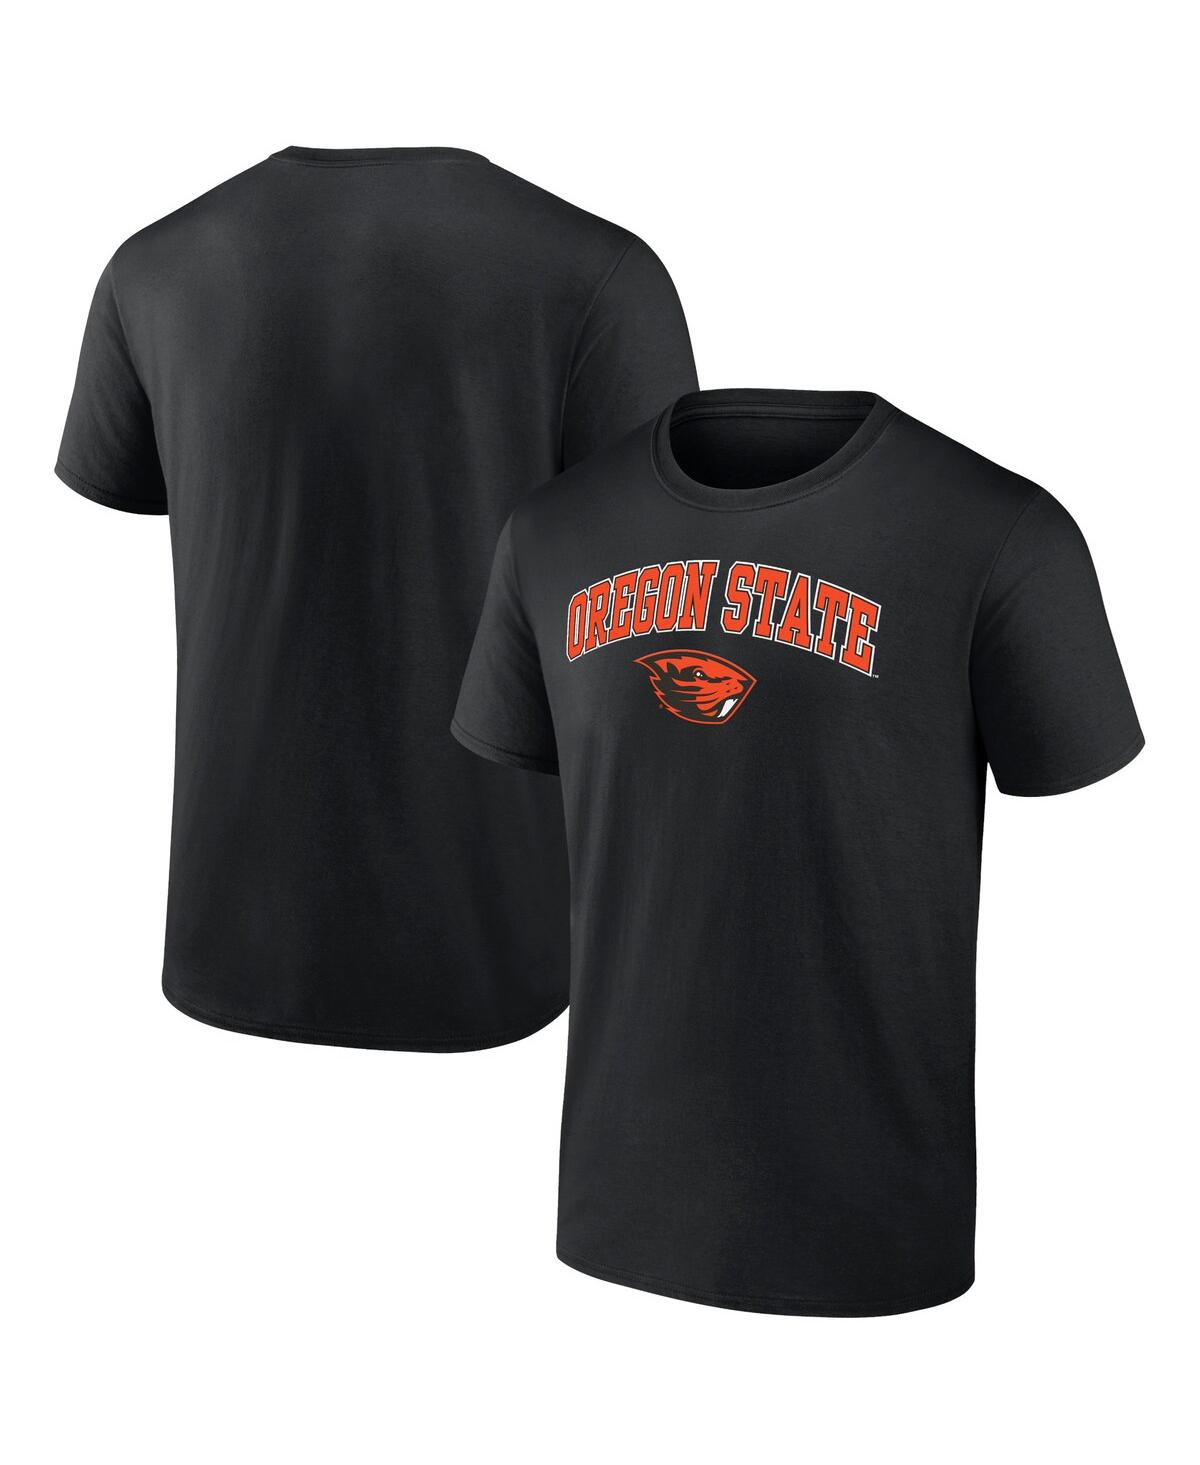 Fanatics Men's  Black Oregon State Beavers Campus T-shirt